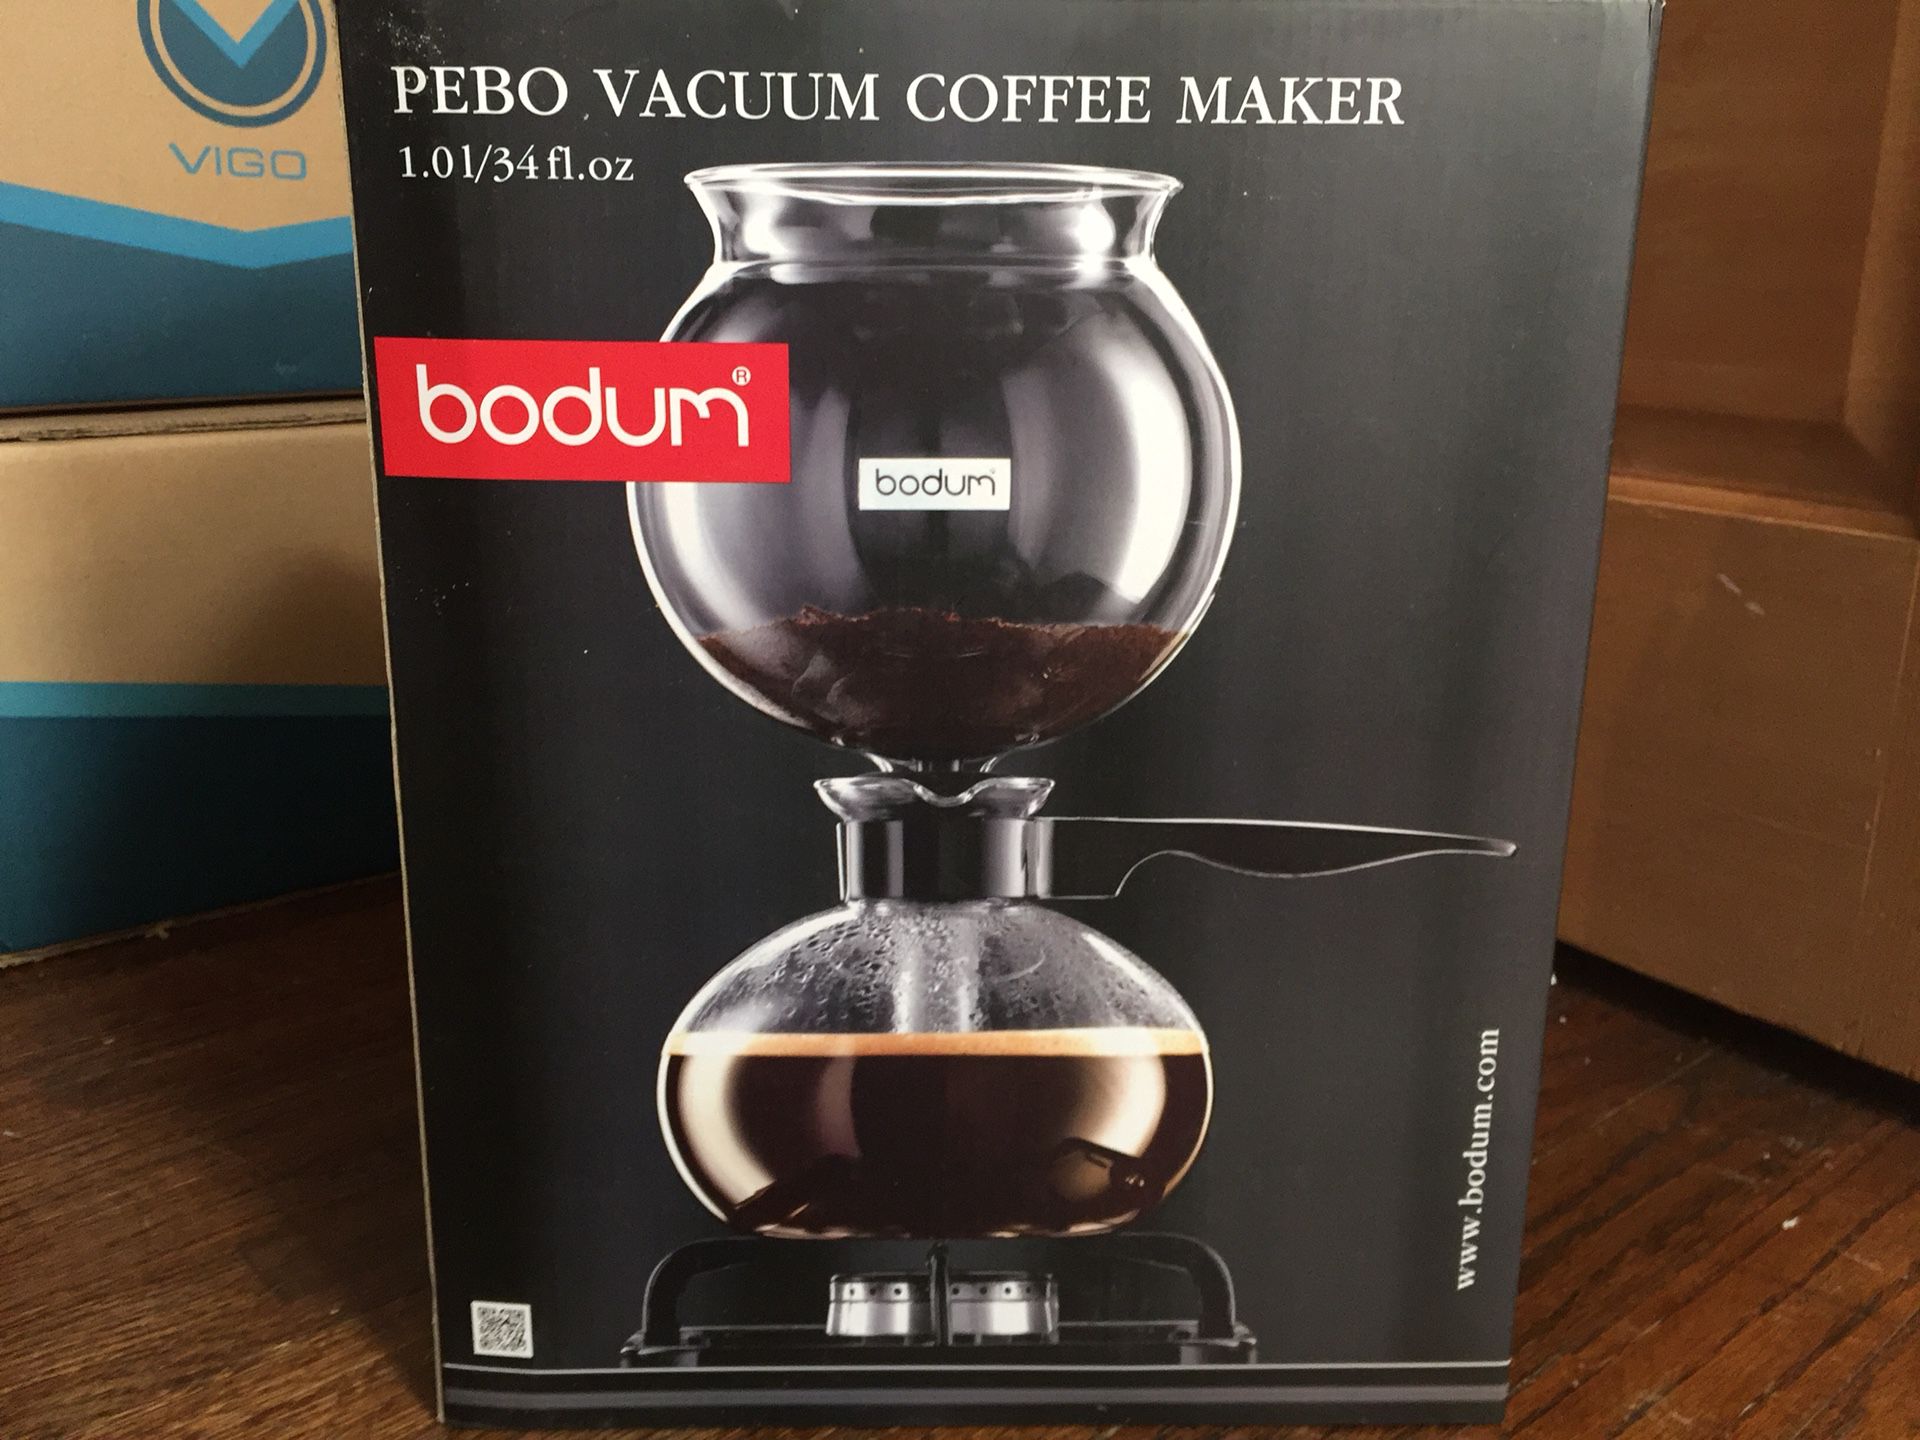 Bodum Pebo Vacuum Coffee Maker new in box